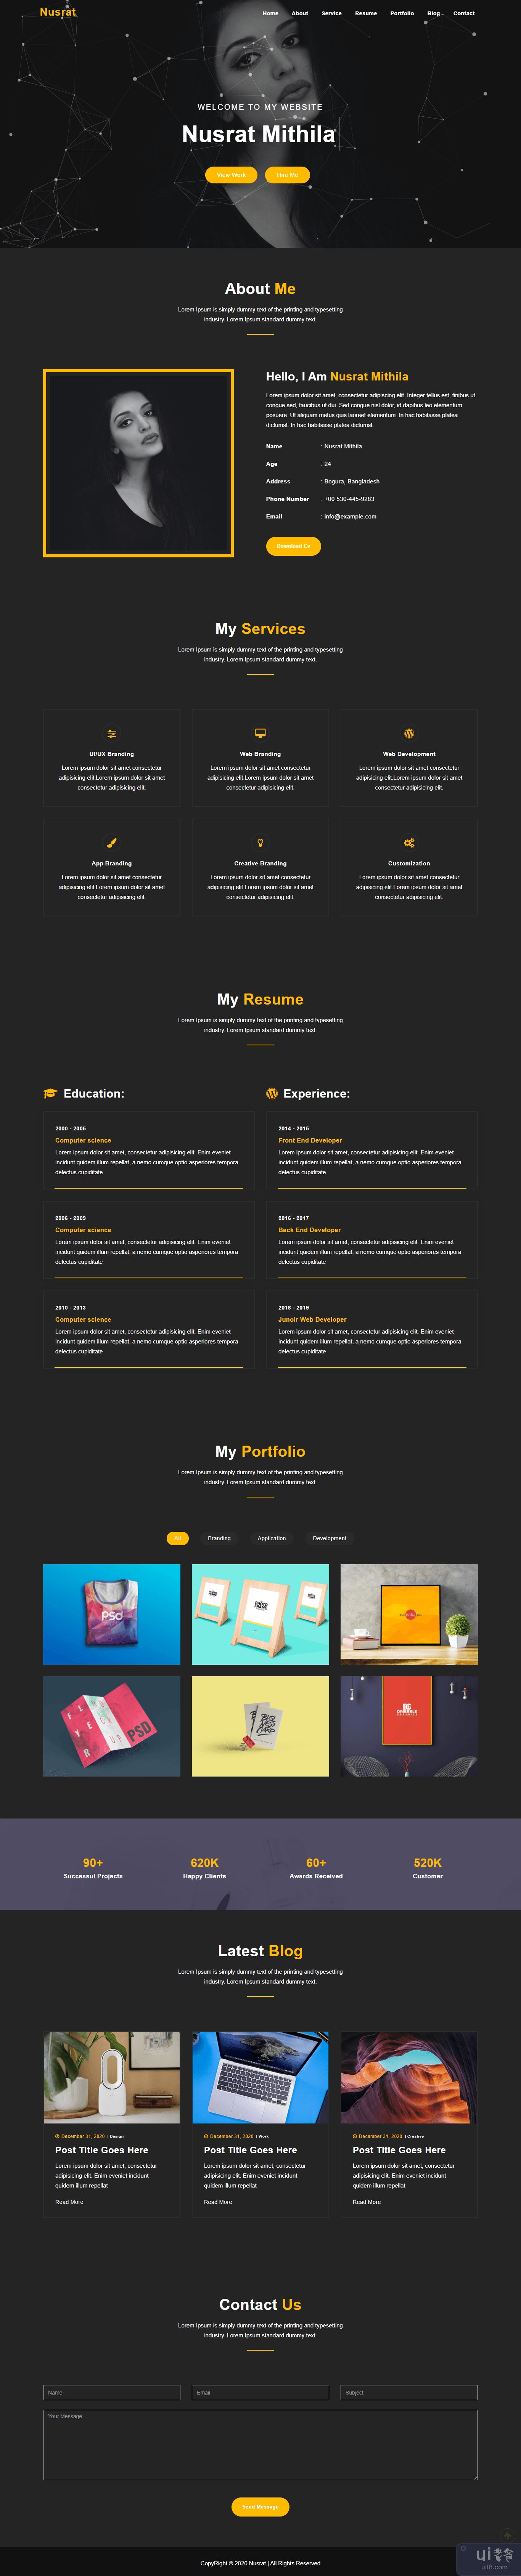 Nusrat 个人投资组合登陆页面模板(Nusrat Personal Portfolio Landing Page Template)插图